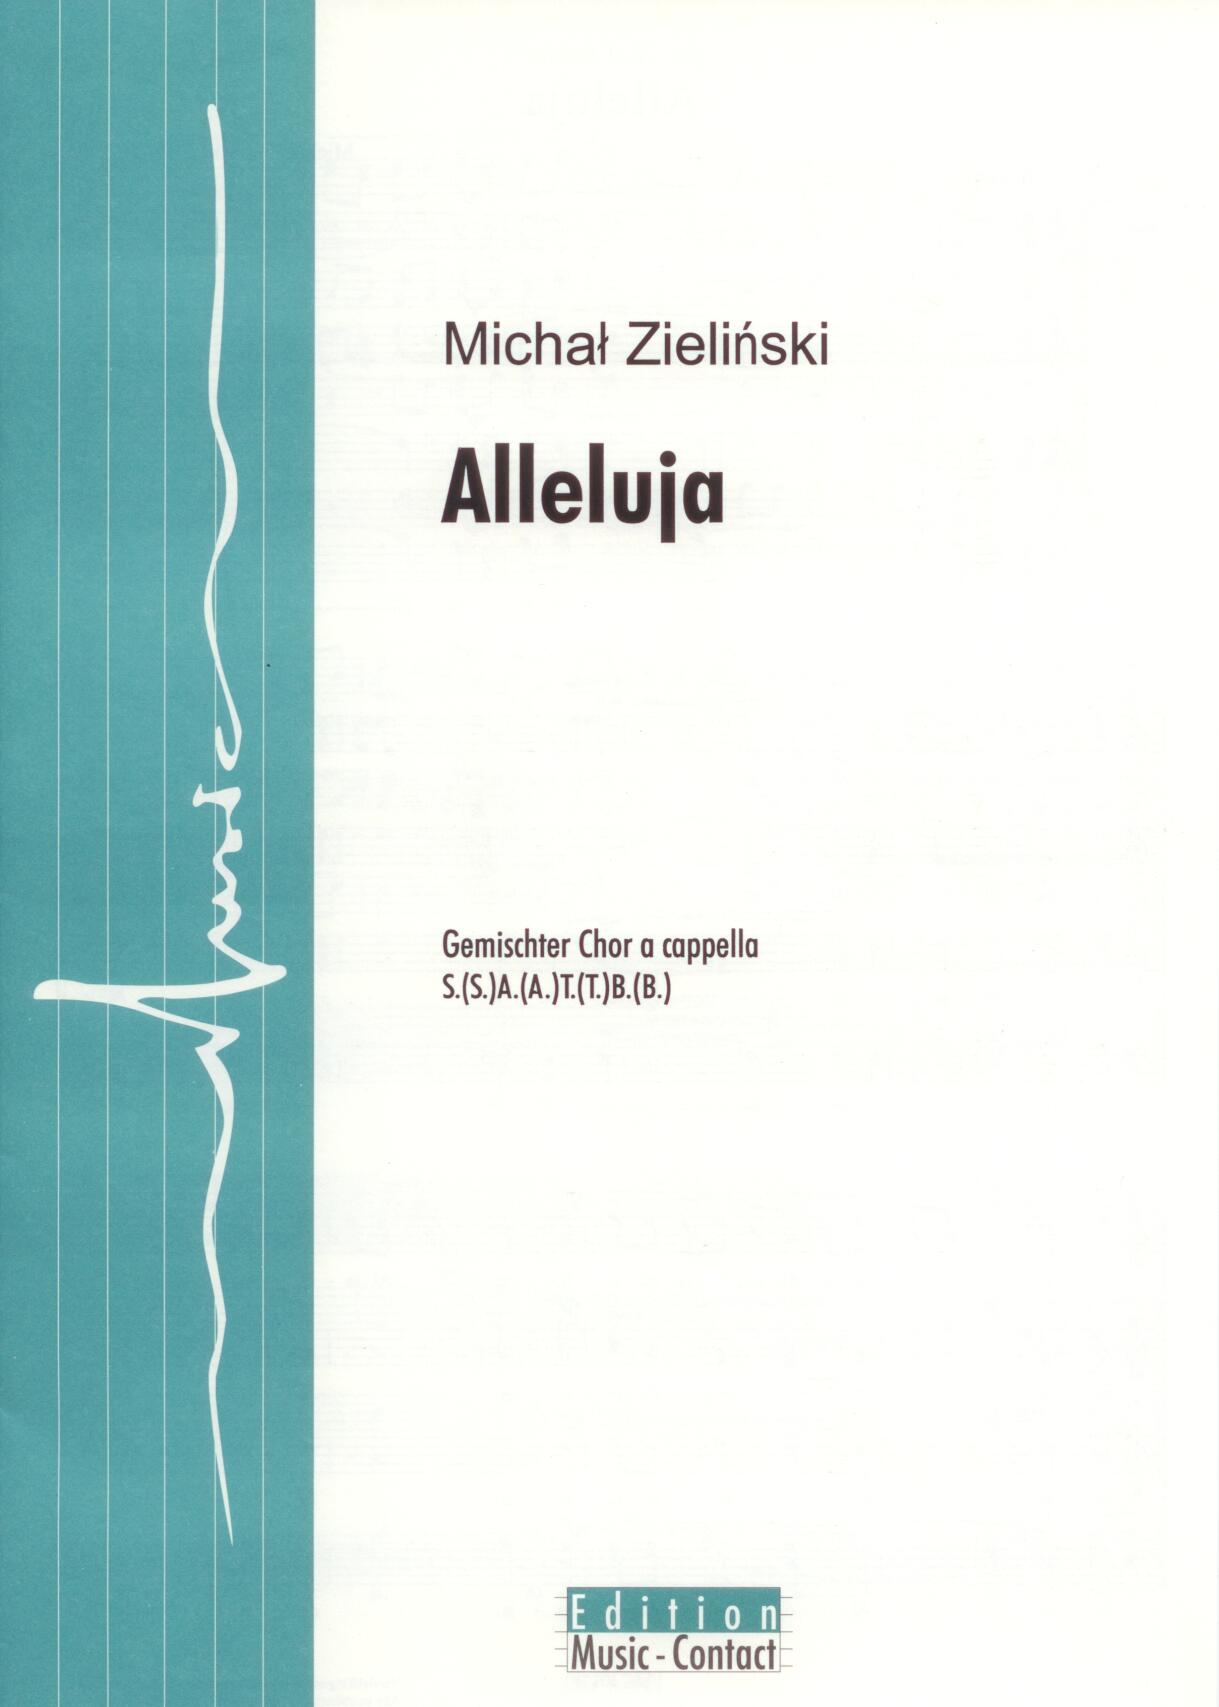 Alleluja - Show sample score